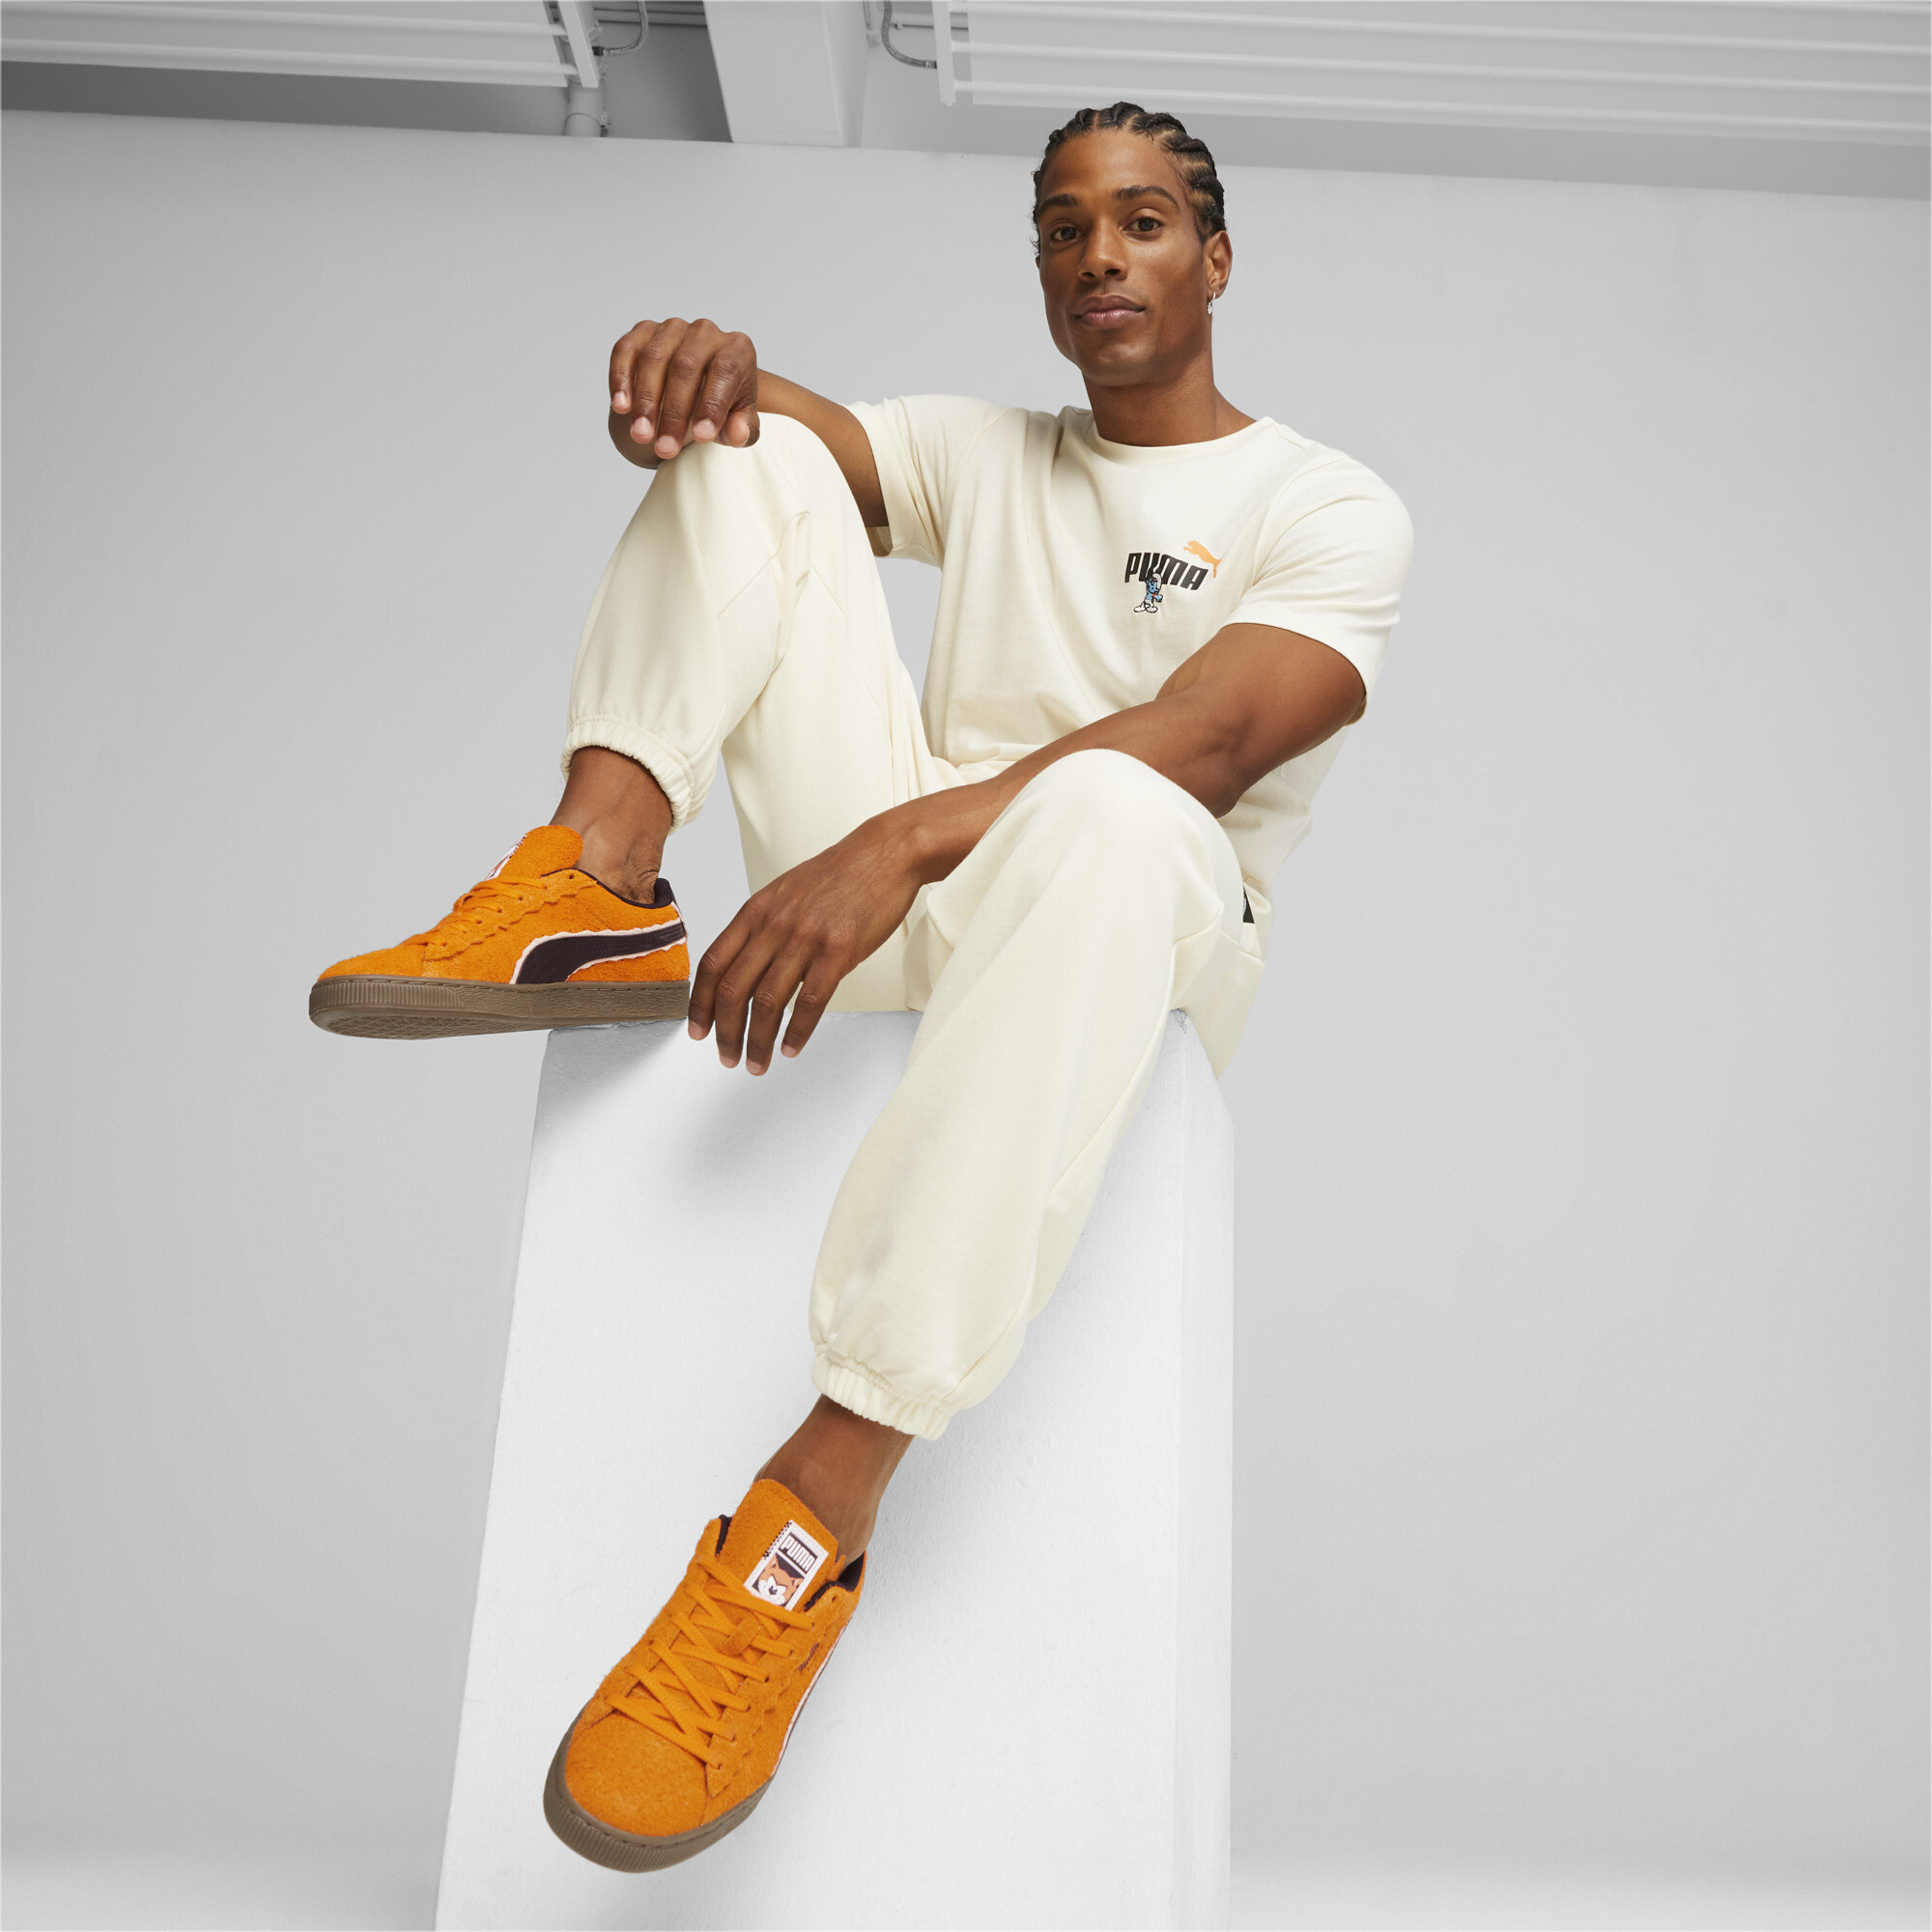 Men's PUMA X THE SMURFS Suede Sneakers In Orange, Size EU 46